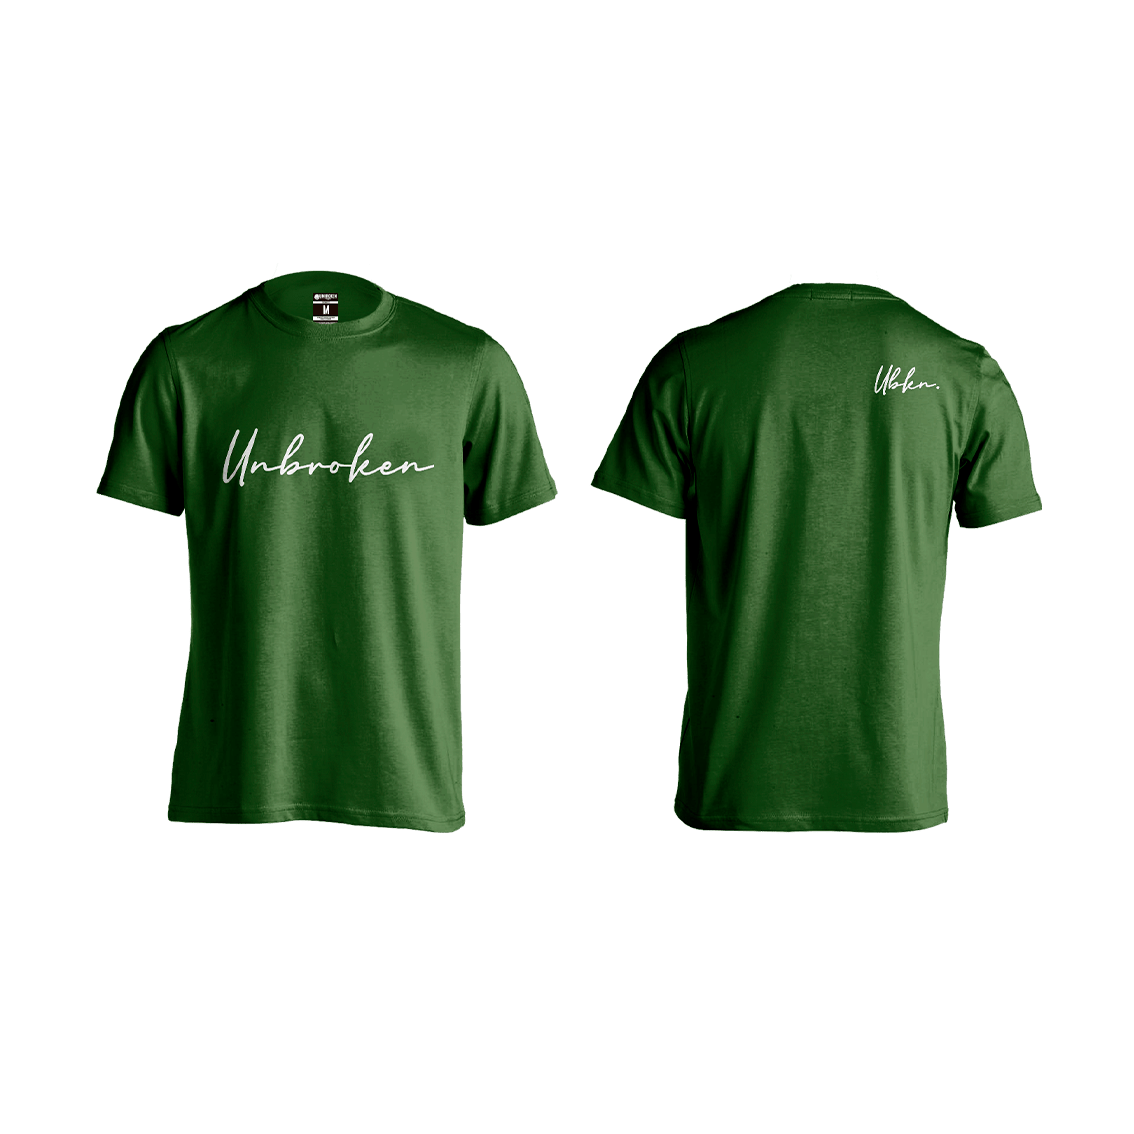 Camiseta Hombre Unbroken Signature green - Unbroken Sports Wear 